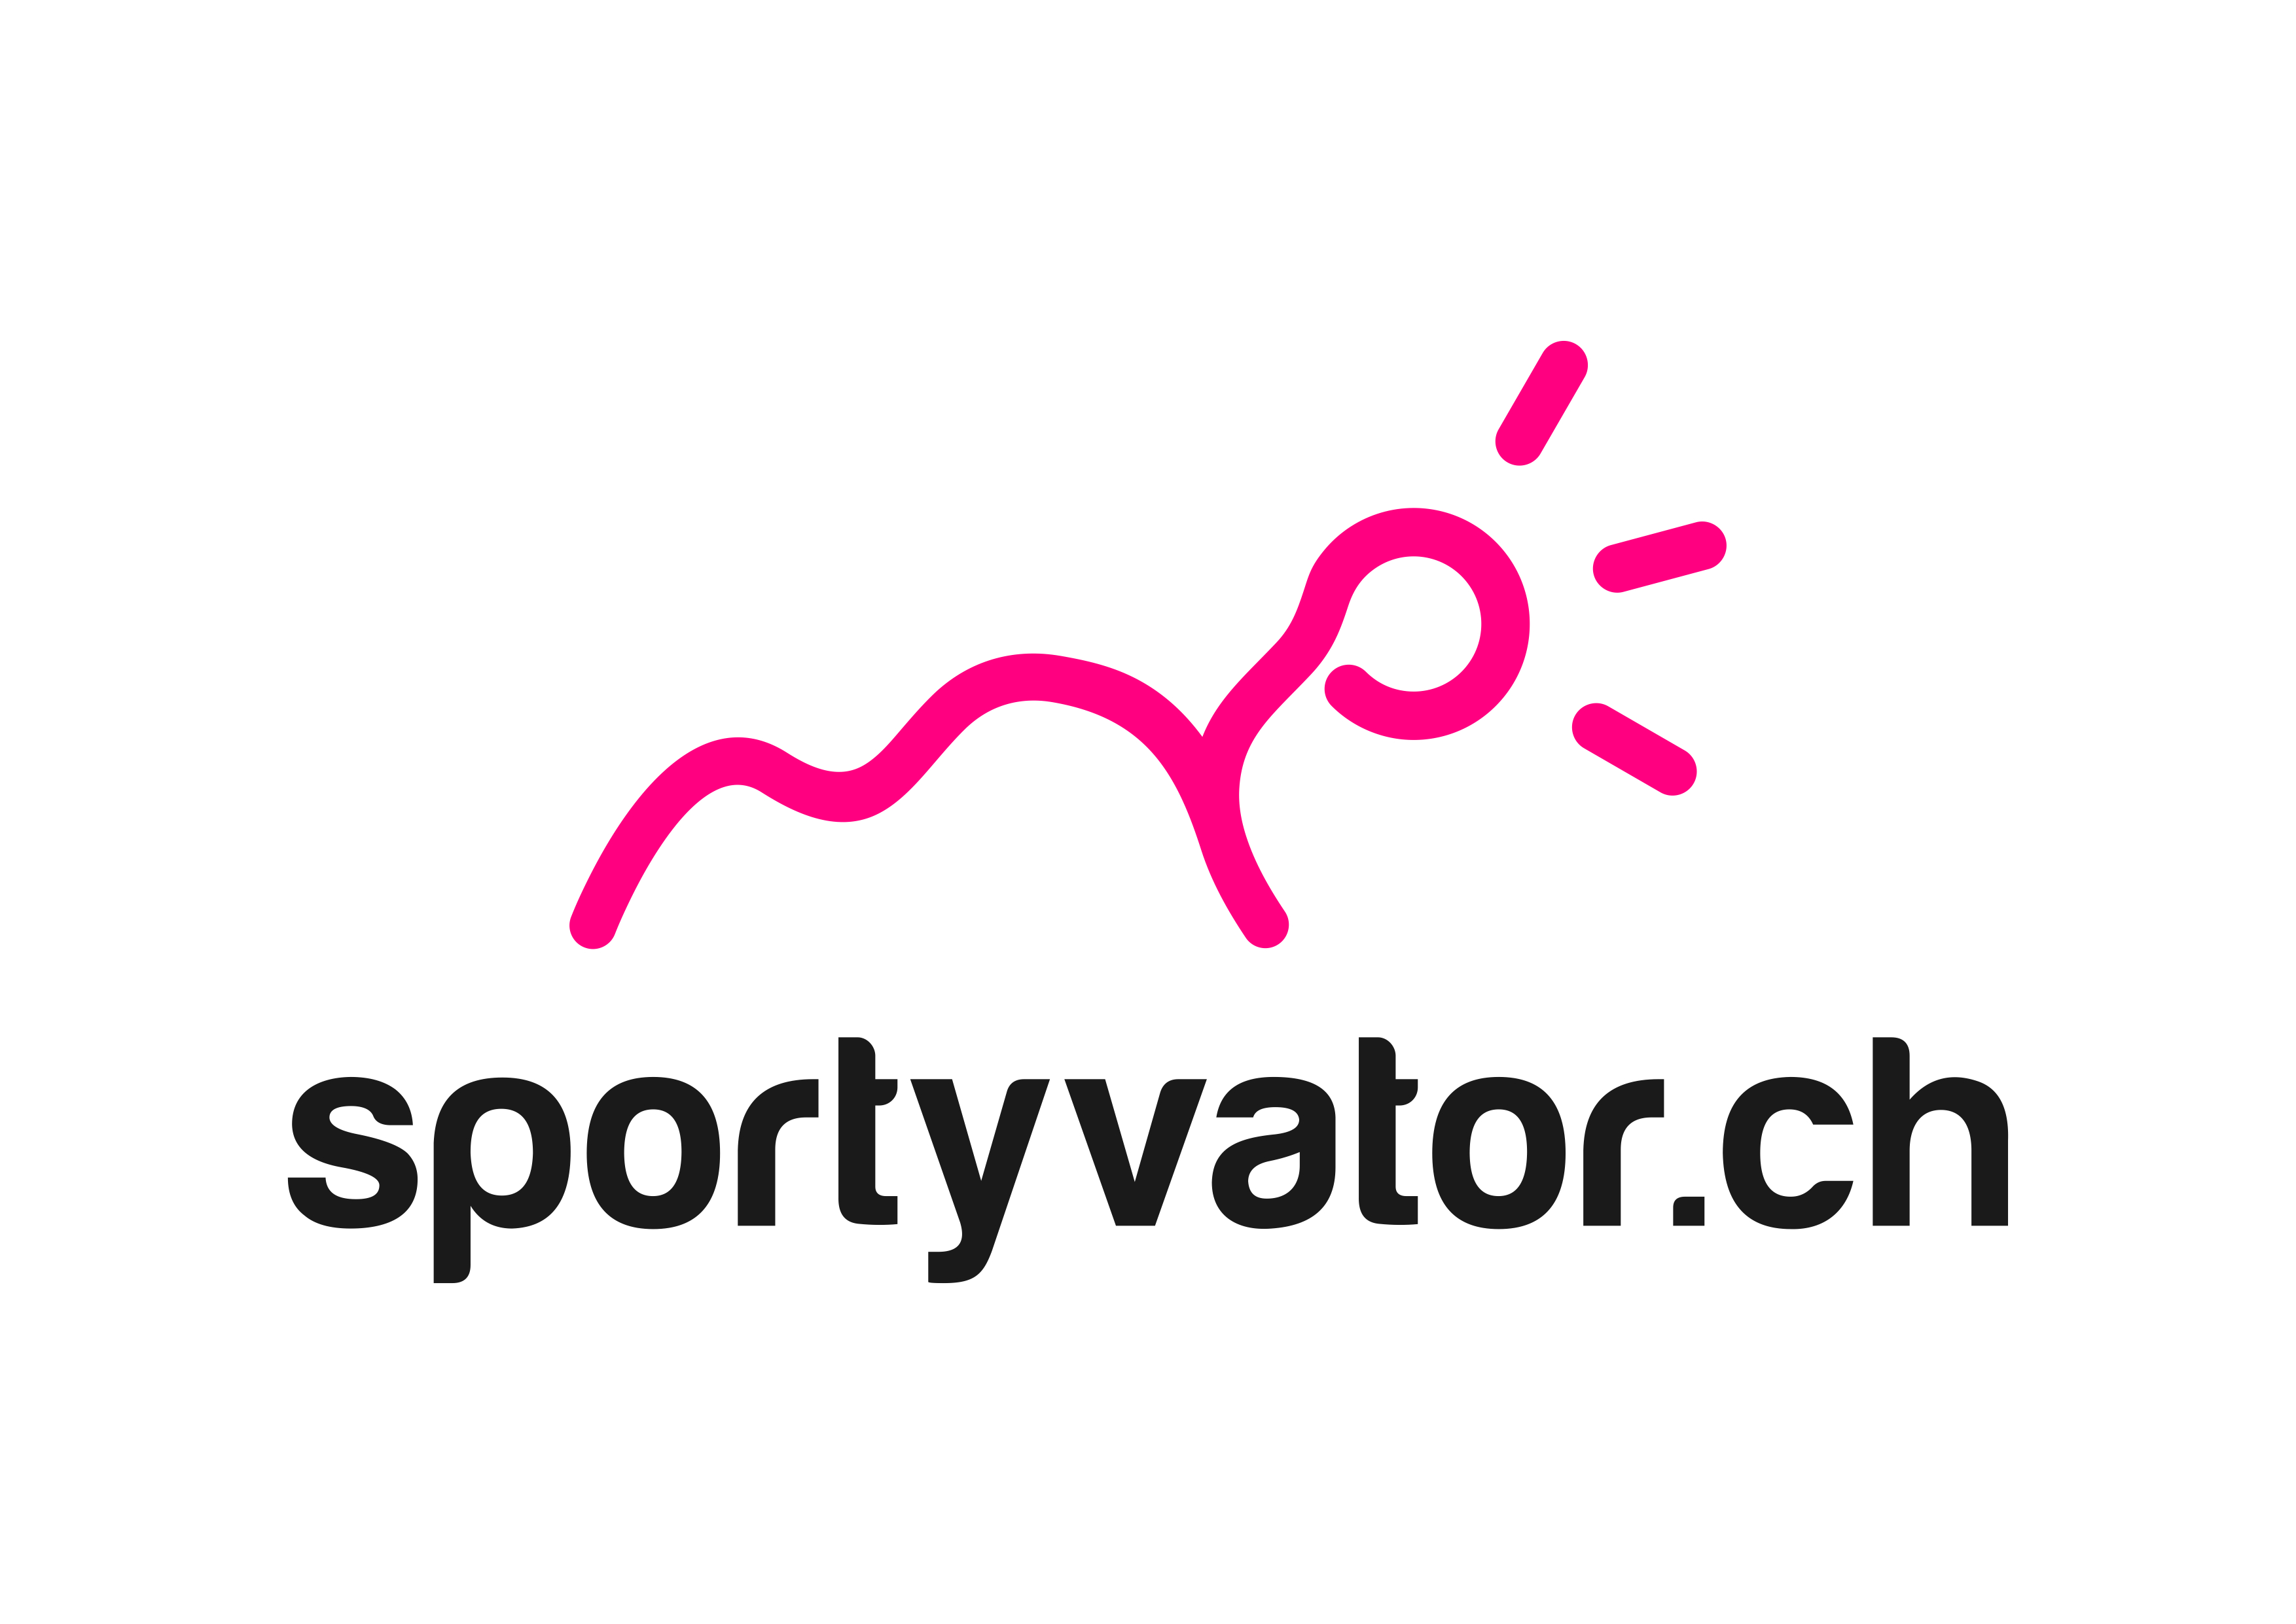 (c) Sportyvator.ch